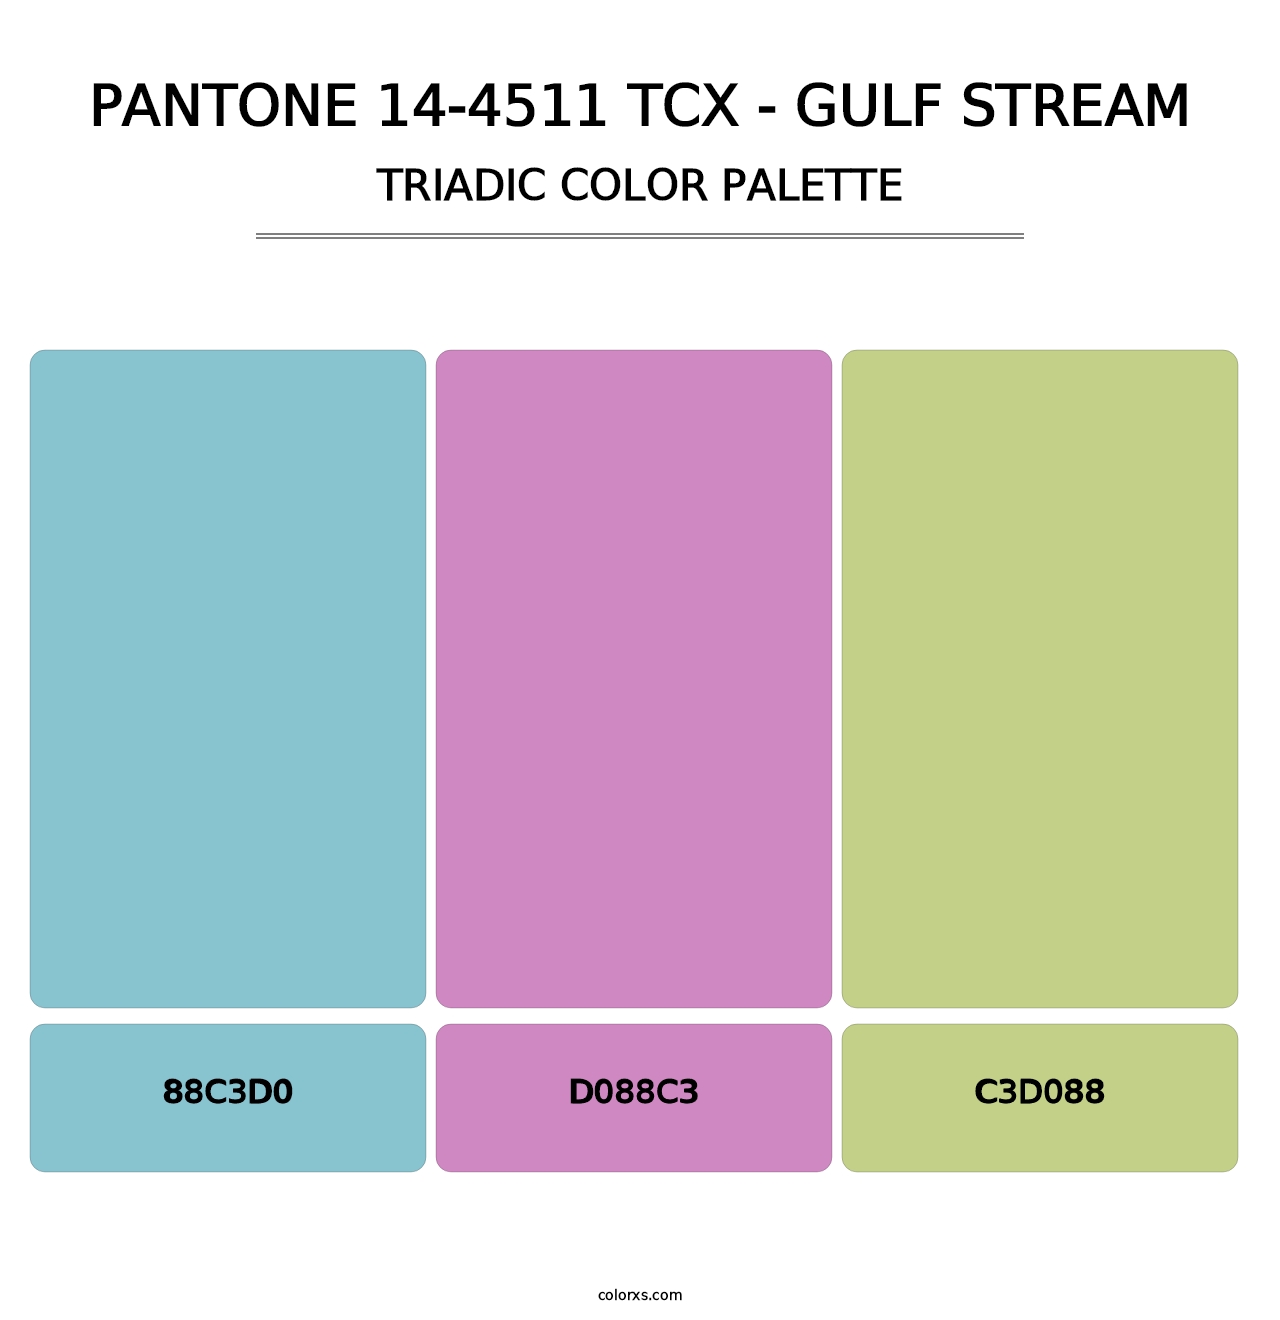 PANTONE 14-4511 TCX - Gulf Stream - Triadic Color Palette